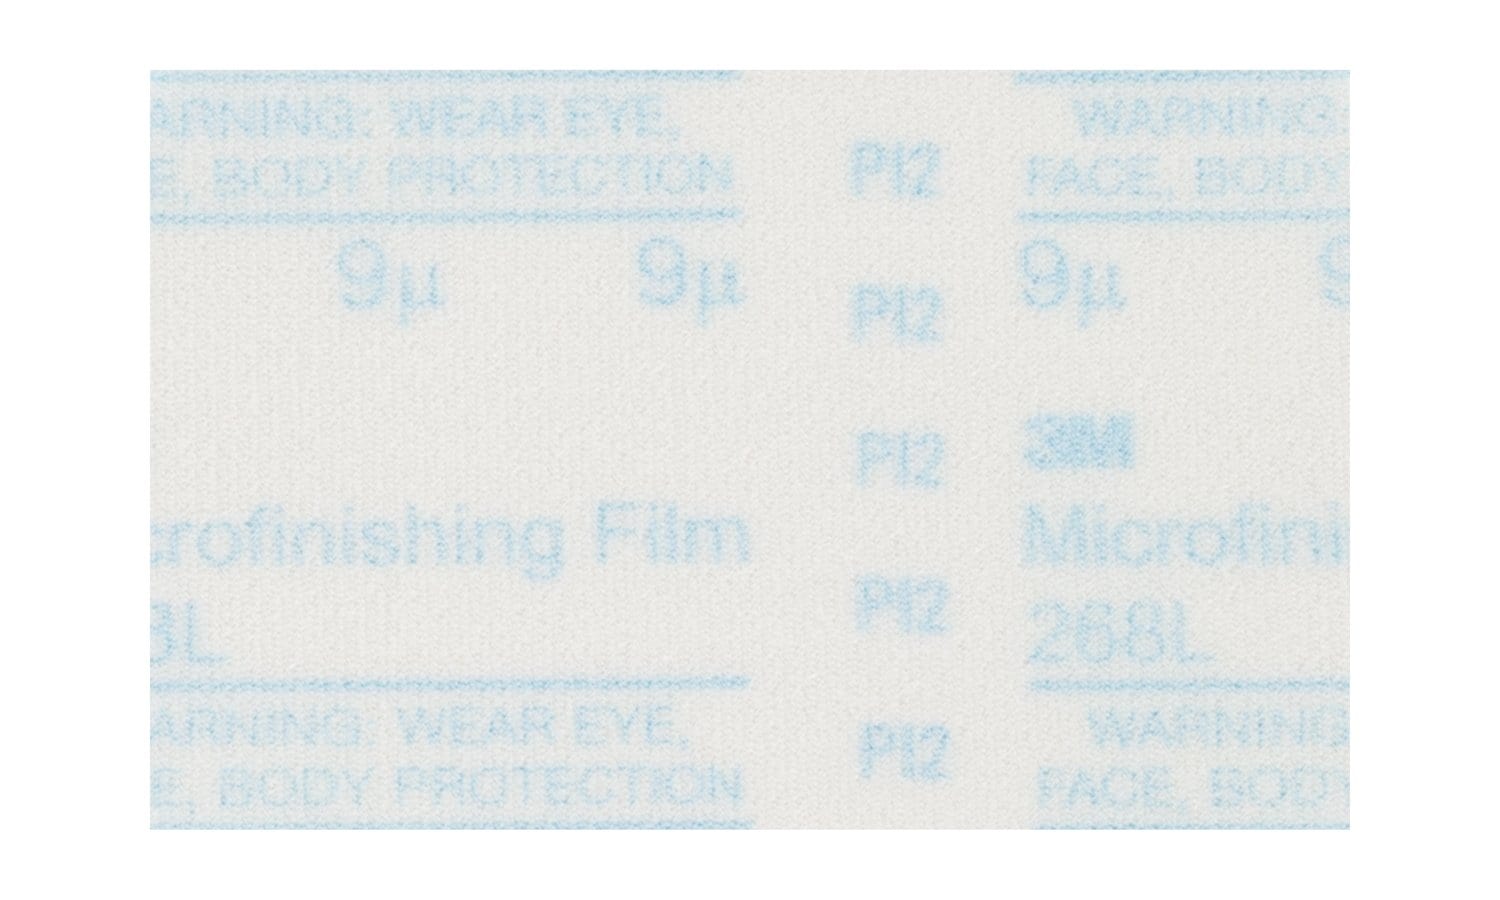 7100047232 - 3M Microfinishing Film Sheet 268L, 40 Mic, Type D, Unbacksized, Config